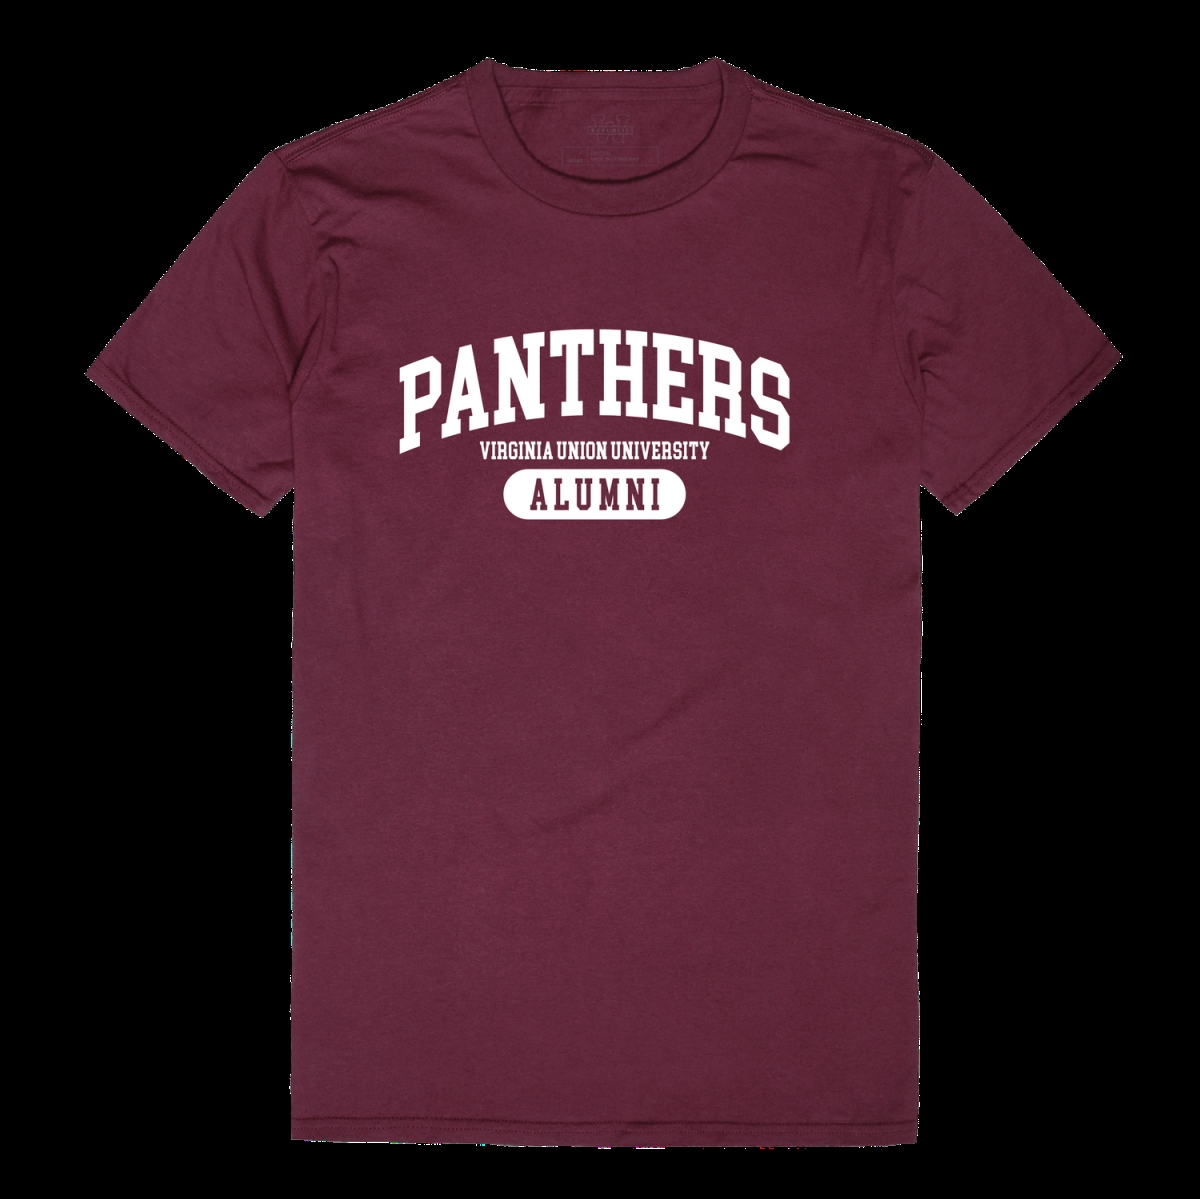 W Republic 559-729-MAR-02 Virginia Union University Panthers Alumni T-Shirt&#44; Maroon - Medium